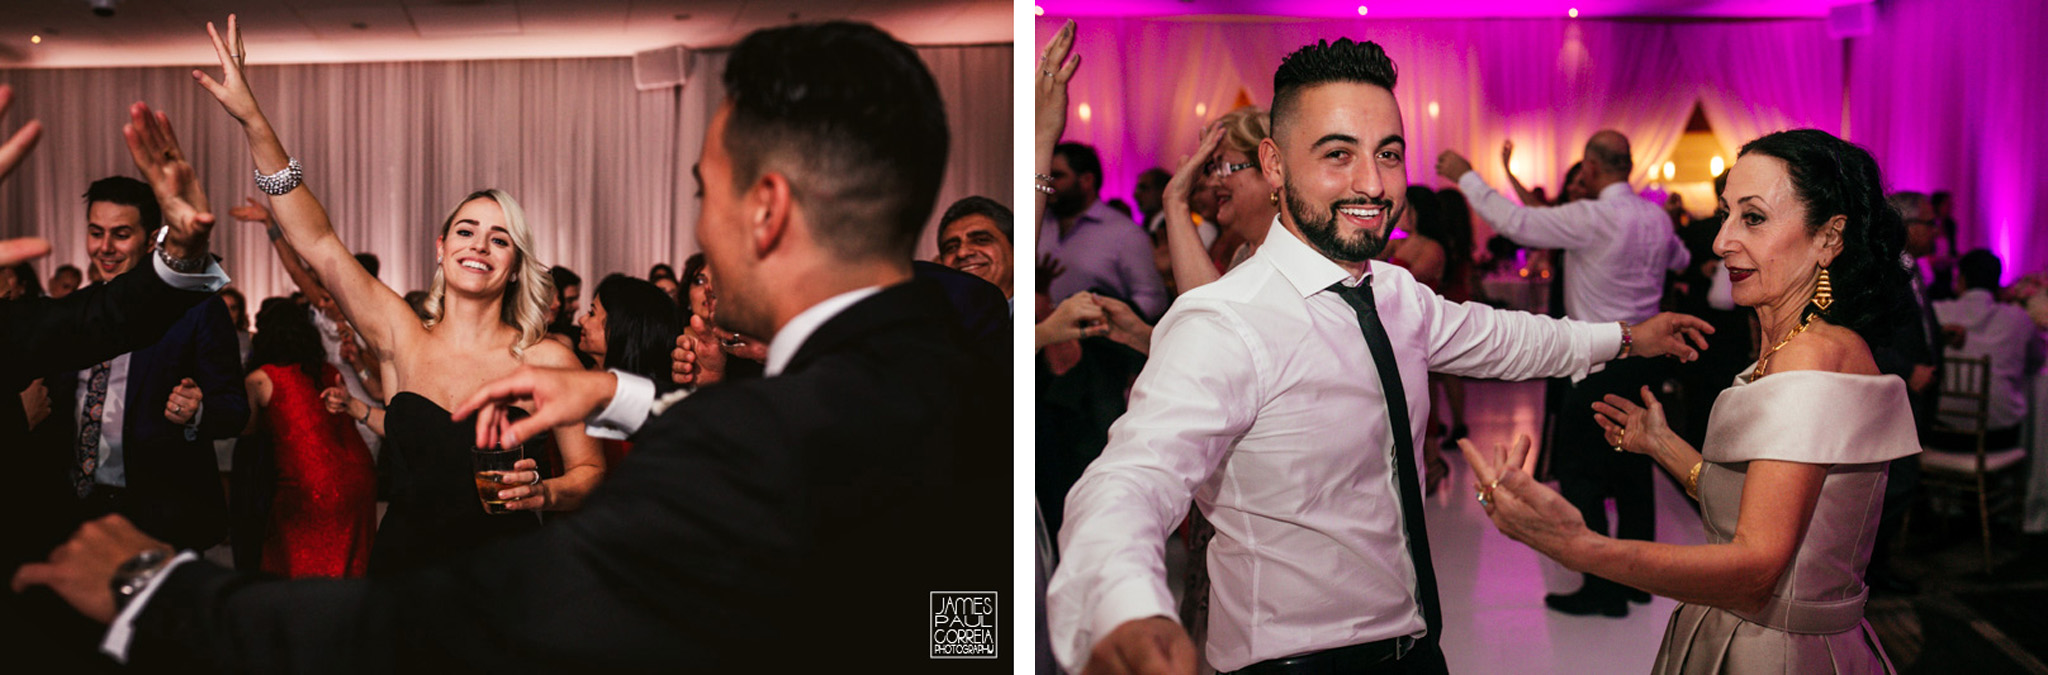 Armenian Community Centre of Toronto wedding reception photographer 1